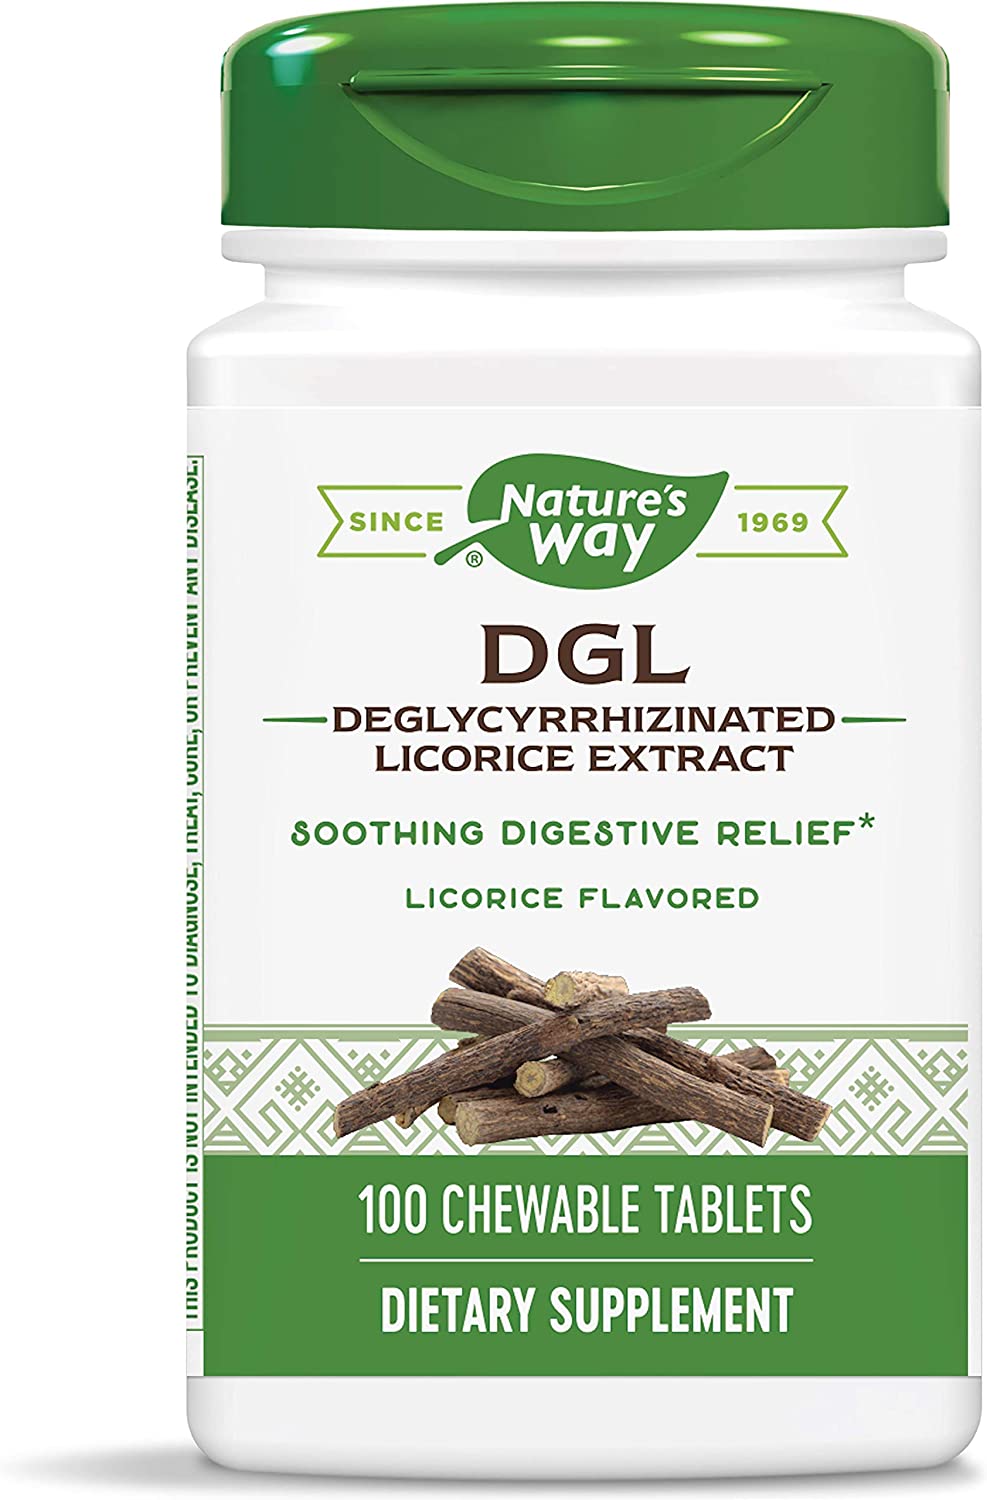 DGL - 100 chewable tablets - Nature's Way